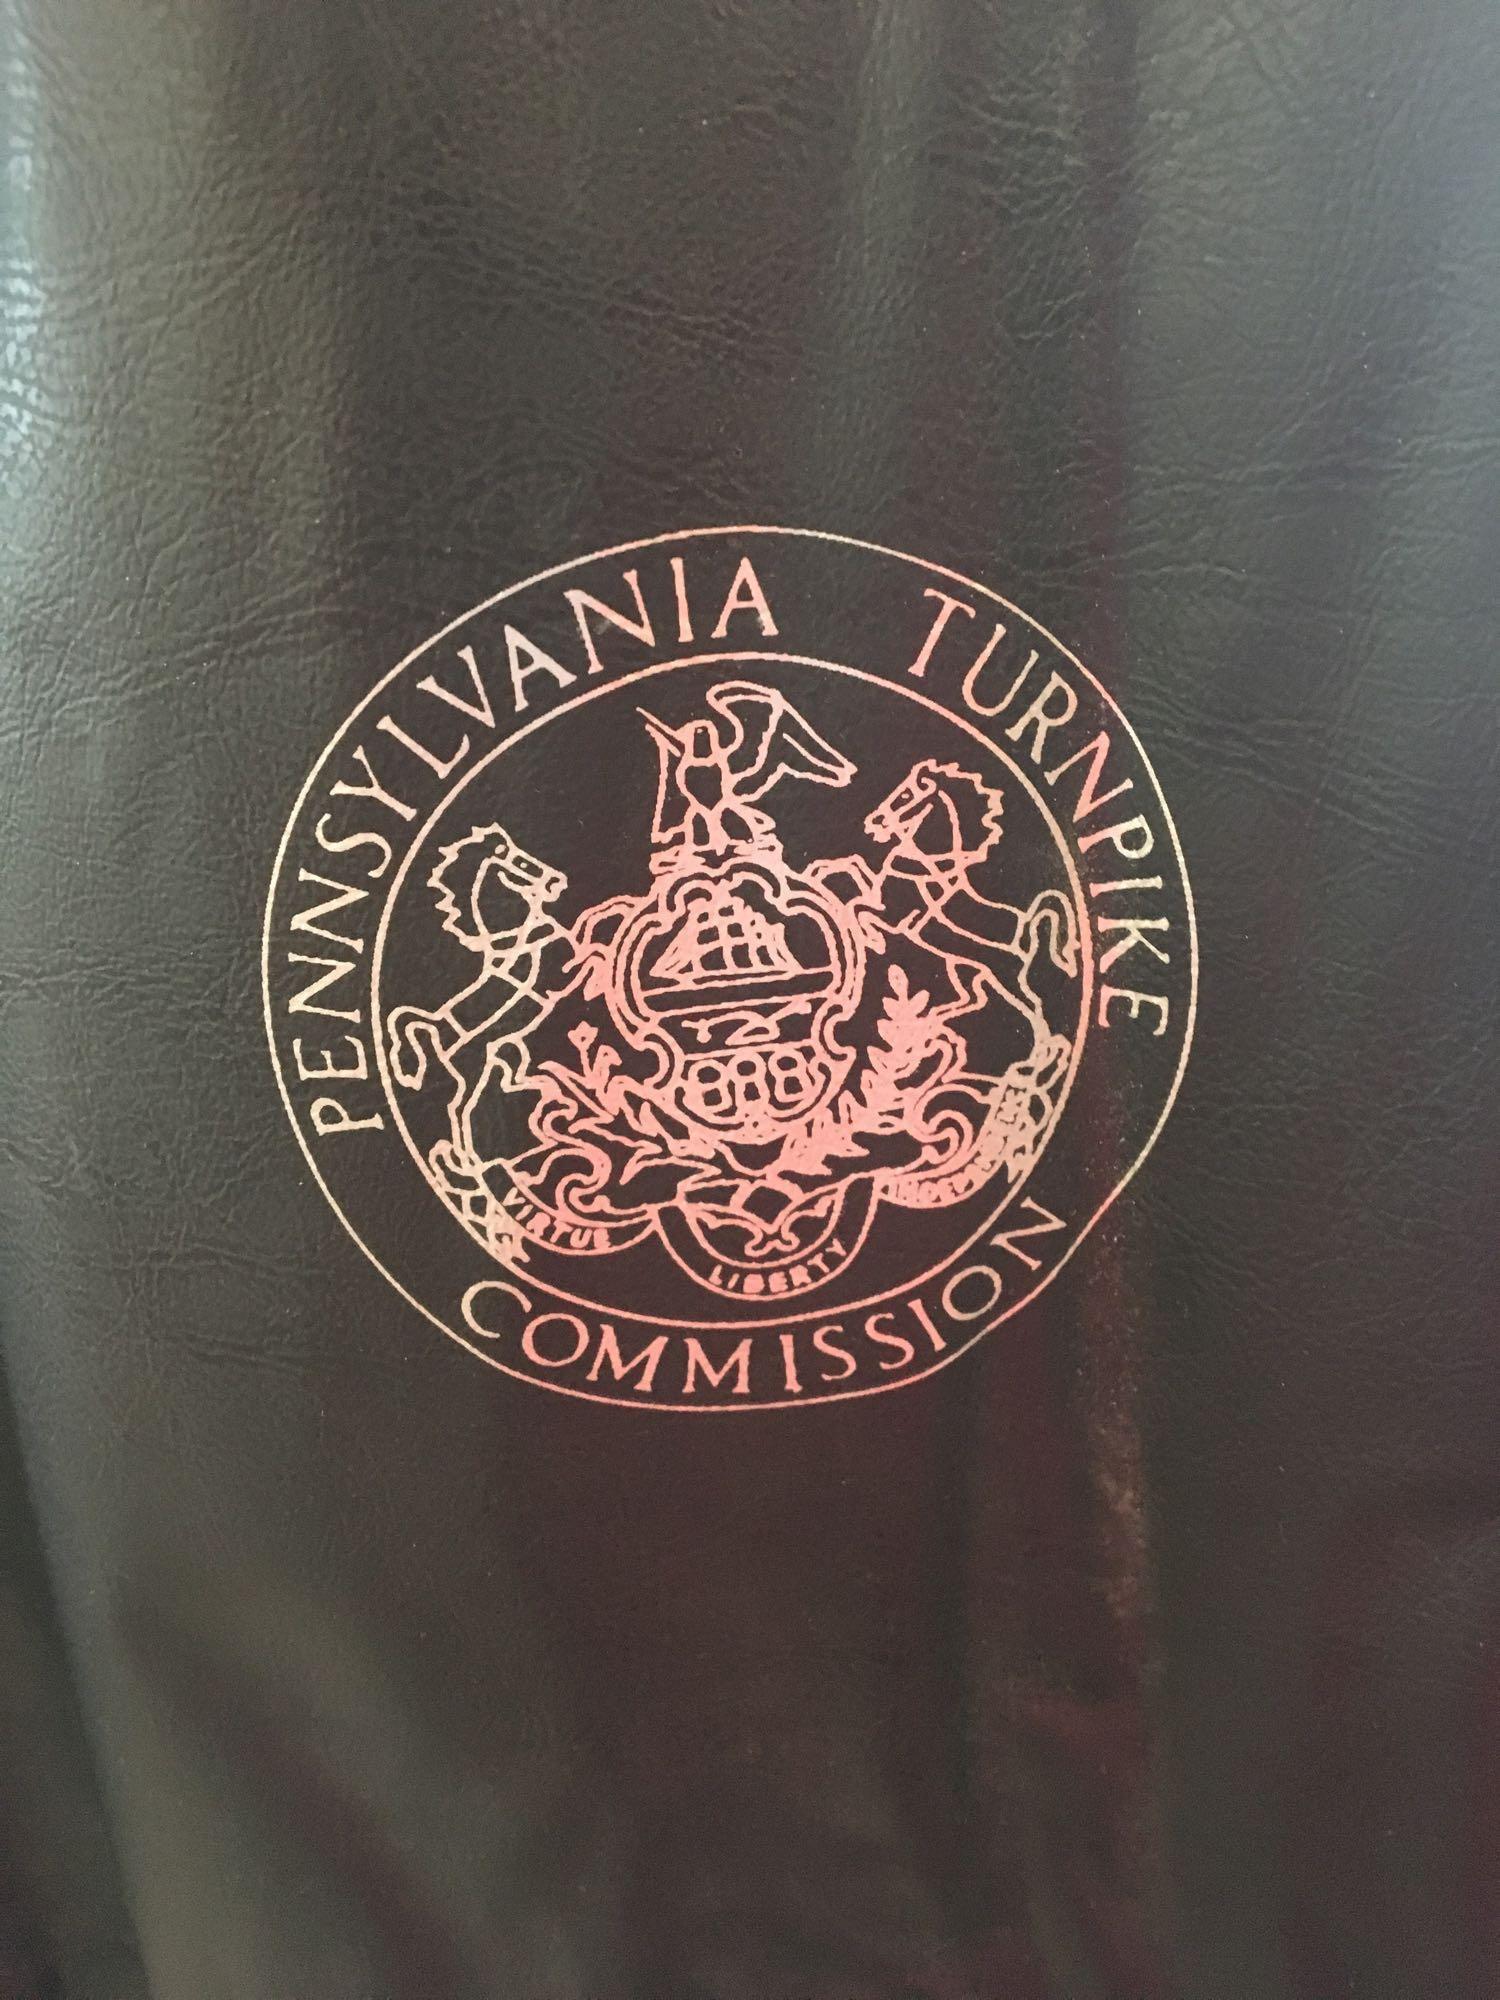 Pennsylvania Turnpike Commission apparel (windbreaker jacket, garment bag, short sleeve workshirt,